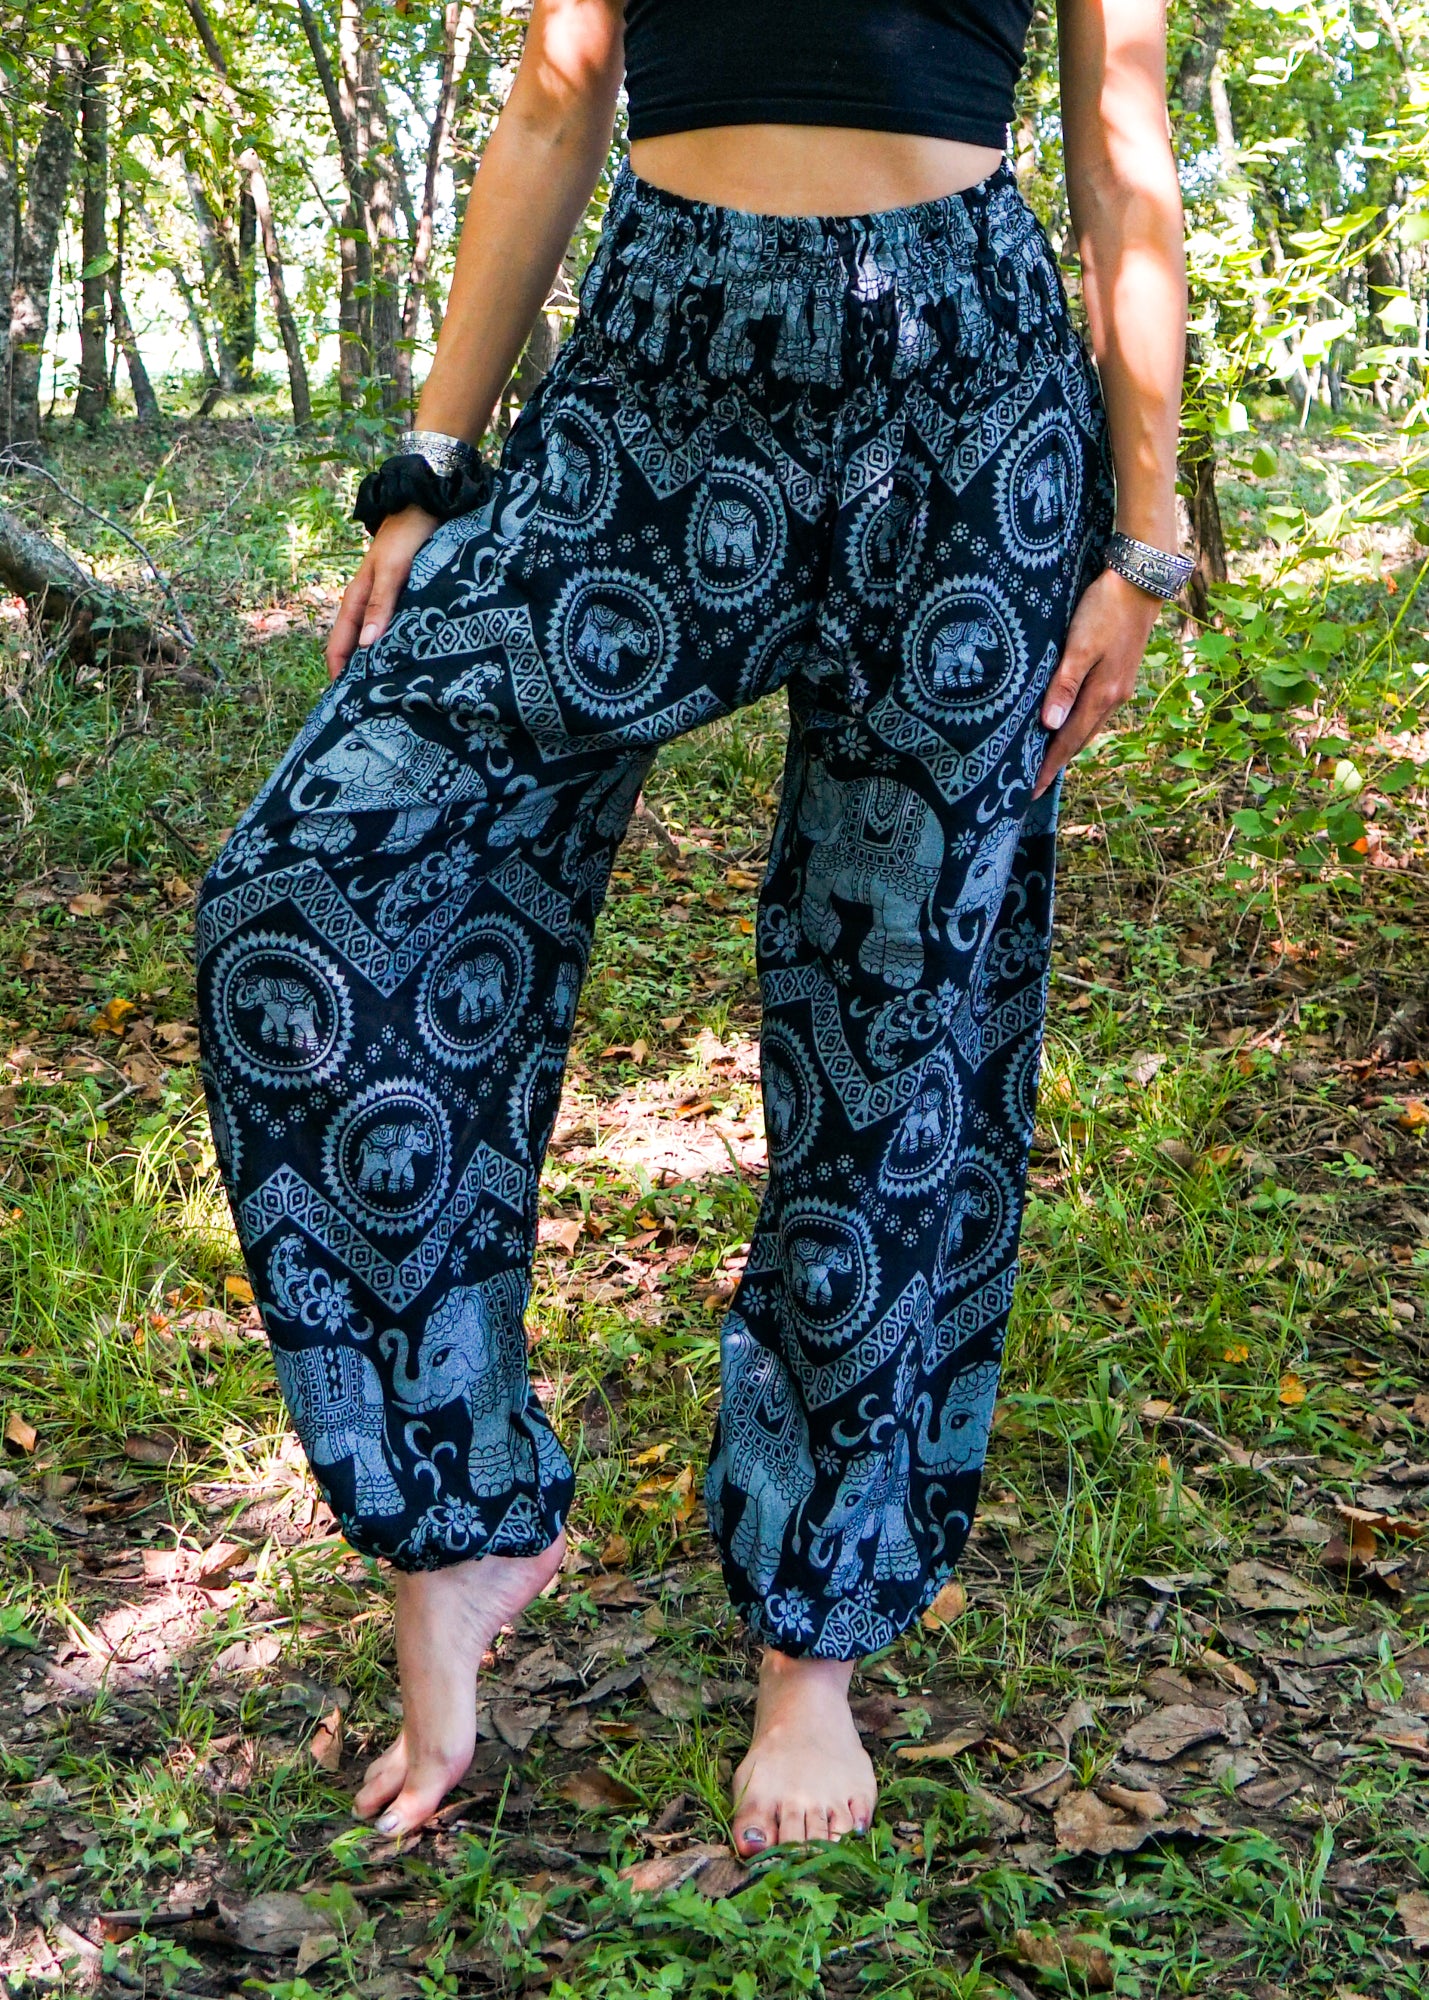 Turquoise Elephant Harem Pants | Elephant pants, Outfits, Yoga clothes boho